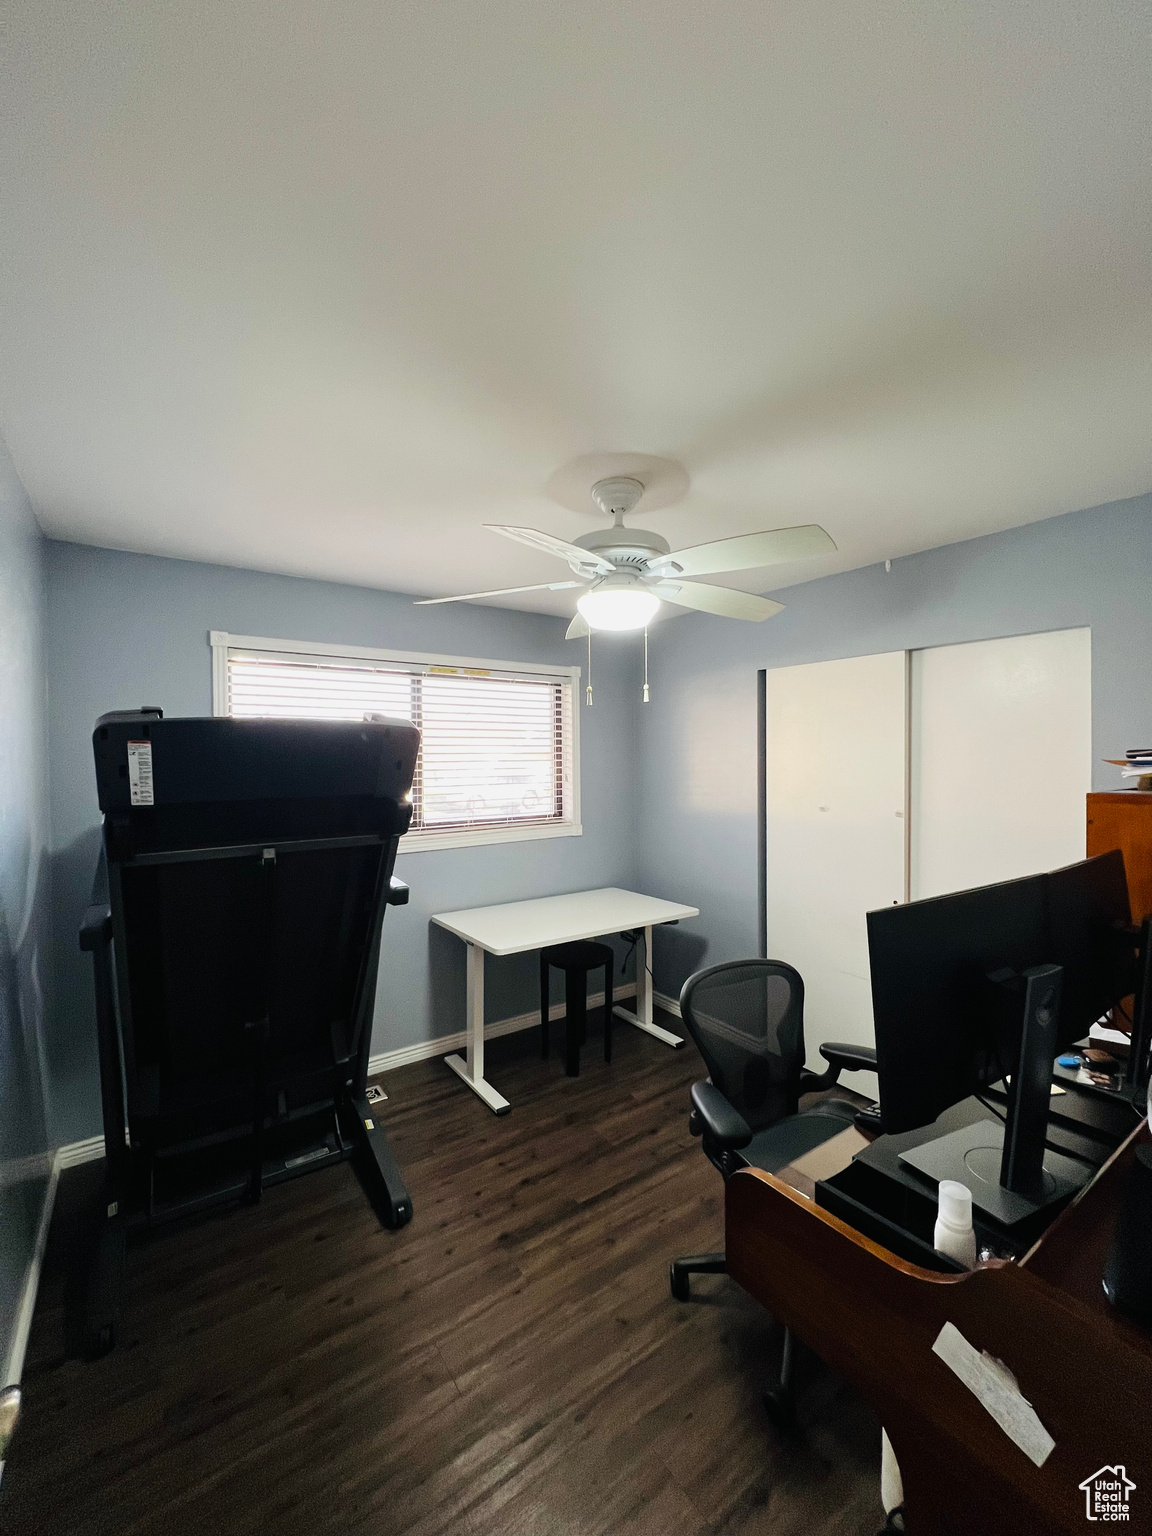 Bedroom/office space